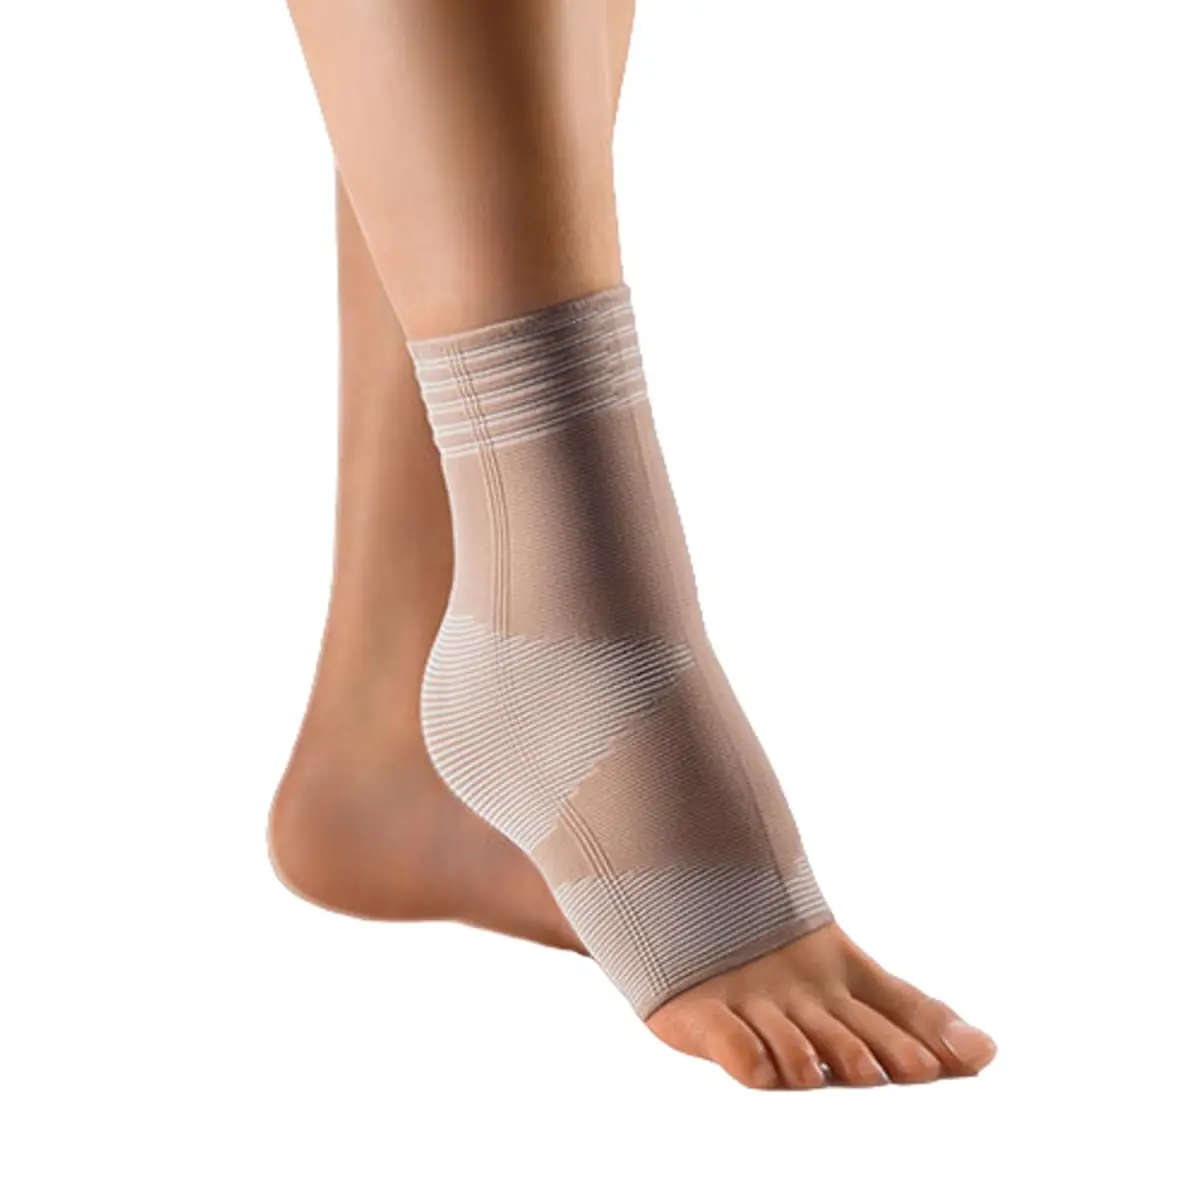 Суппорт для голеностопа Bort Medical Dual-Tension Ankle Support, телесный